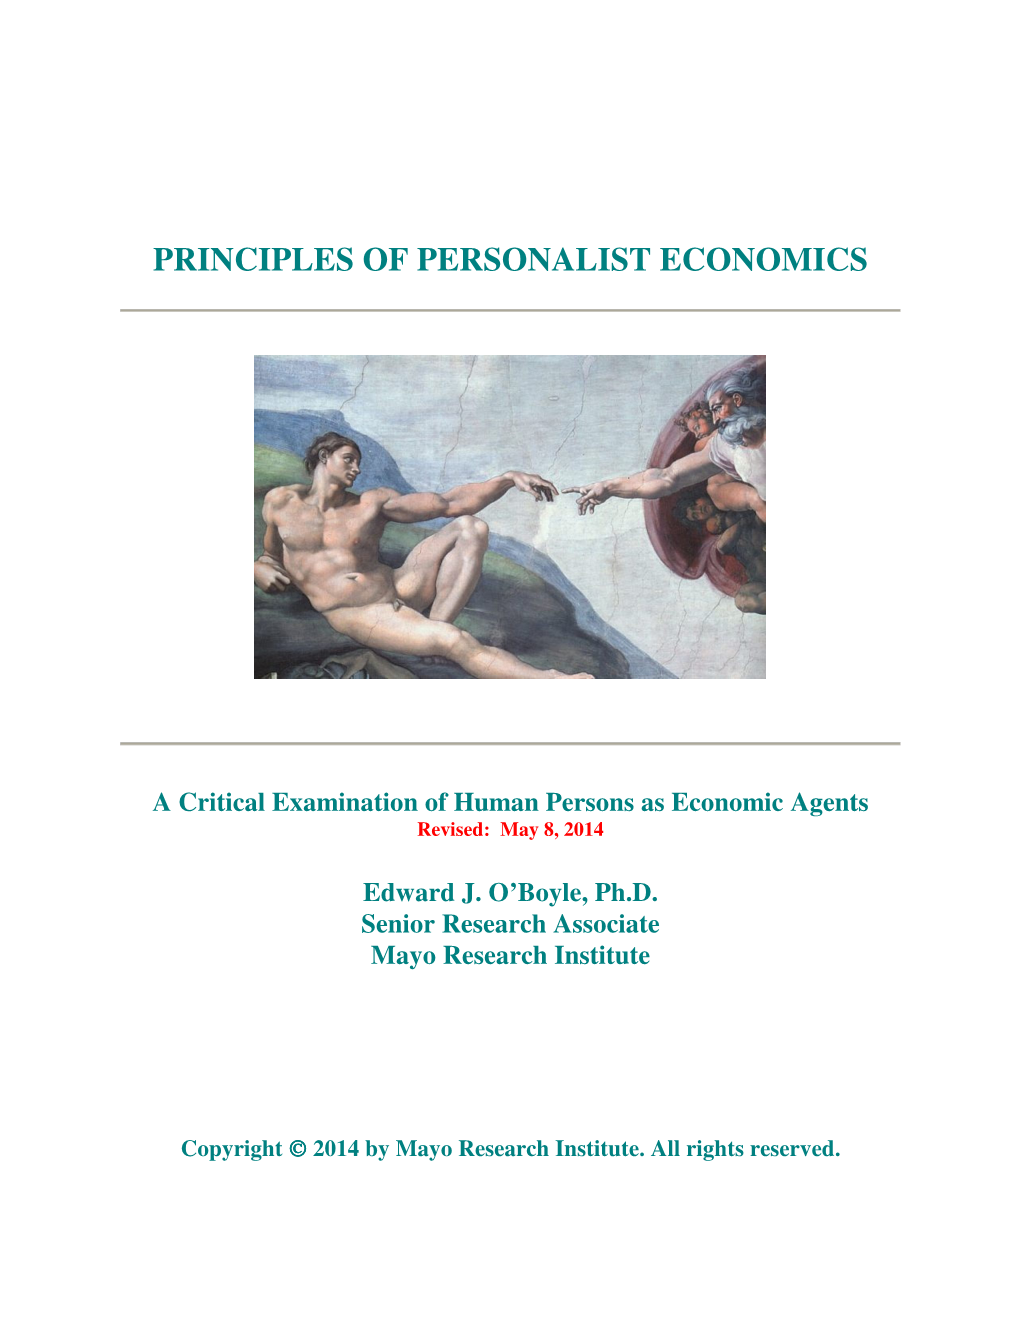 Principles of Personalist Economics